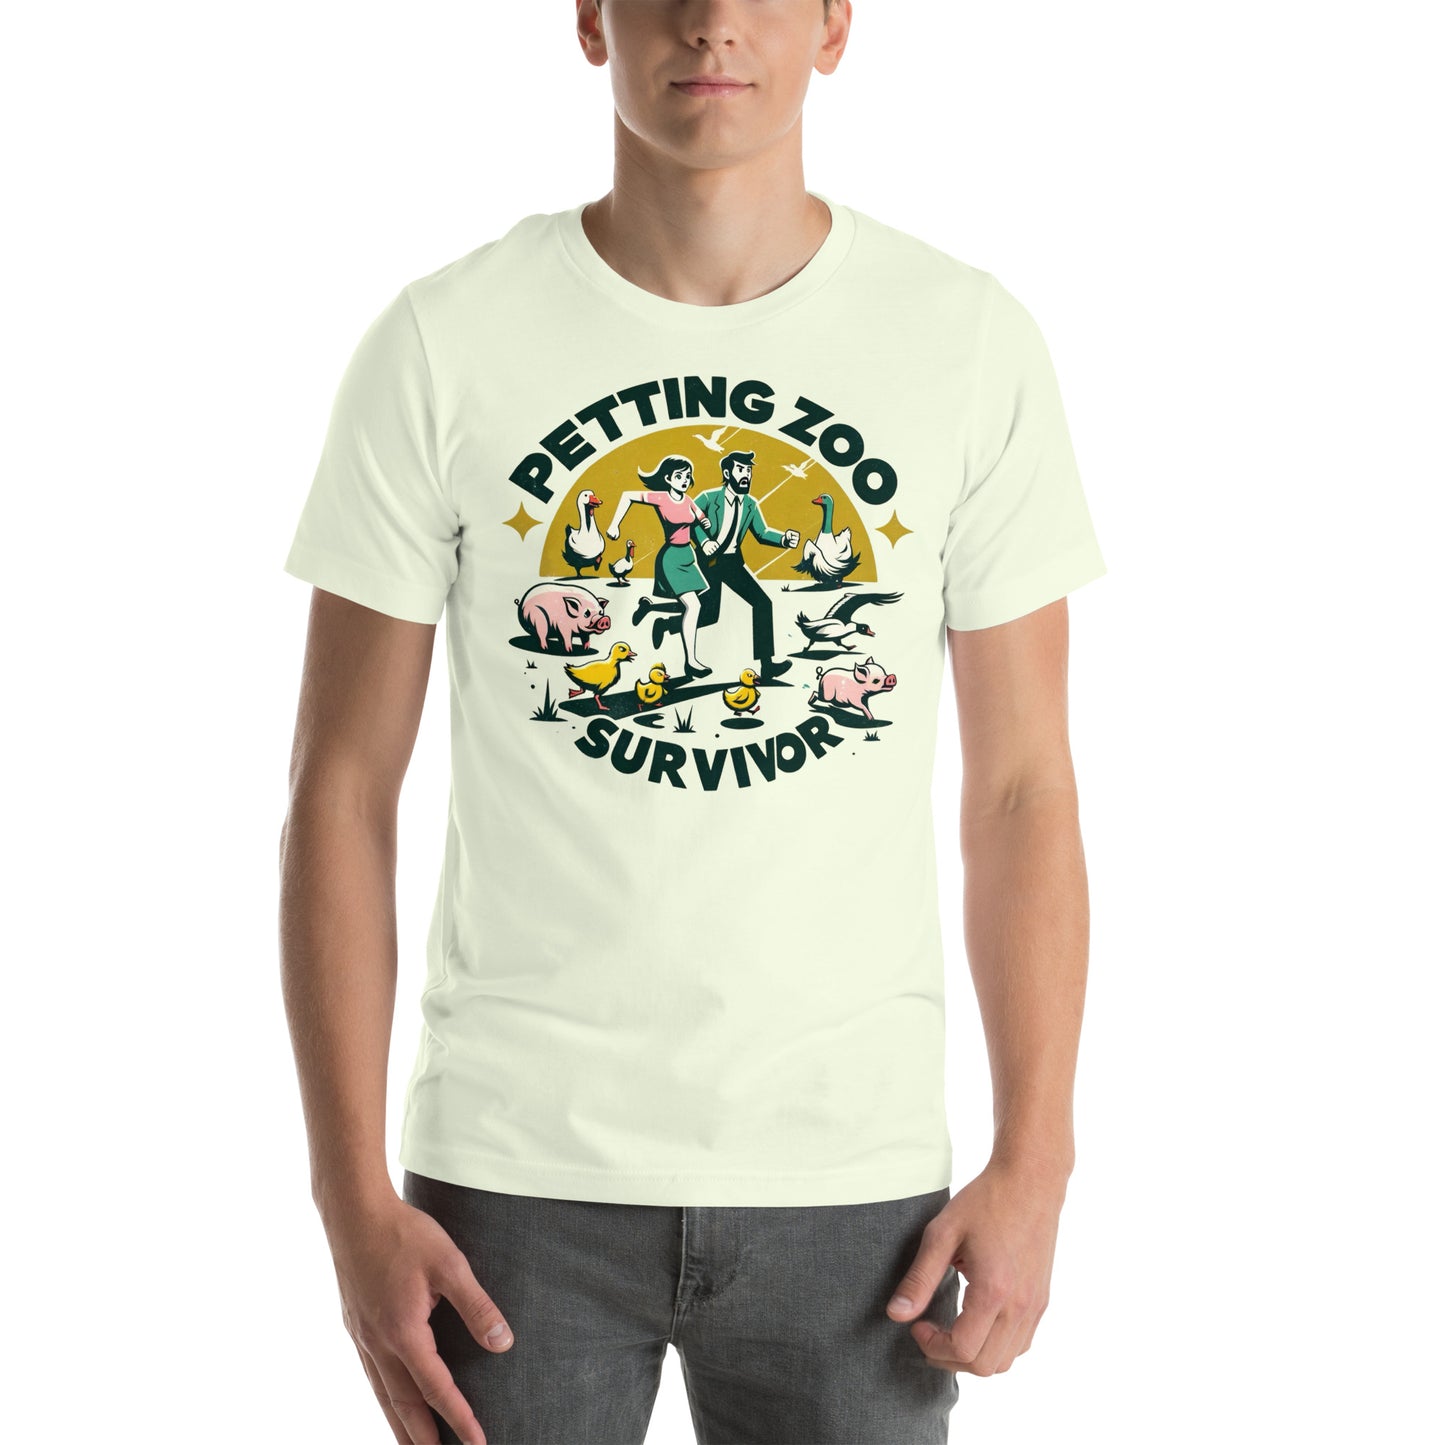 Petting Zoo Survivor Graphic Unisex t-shirt